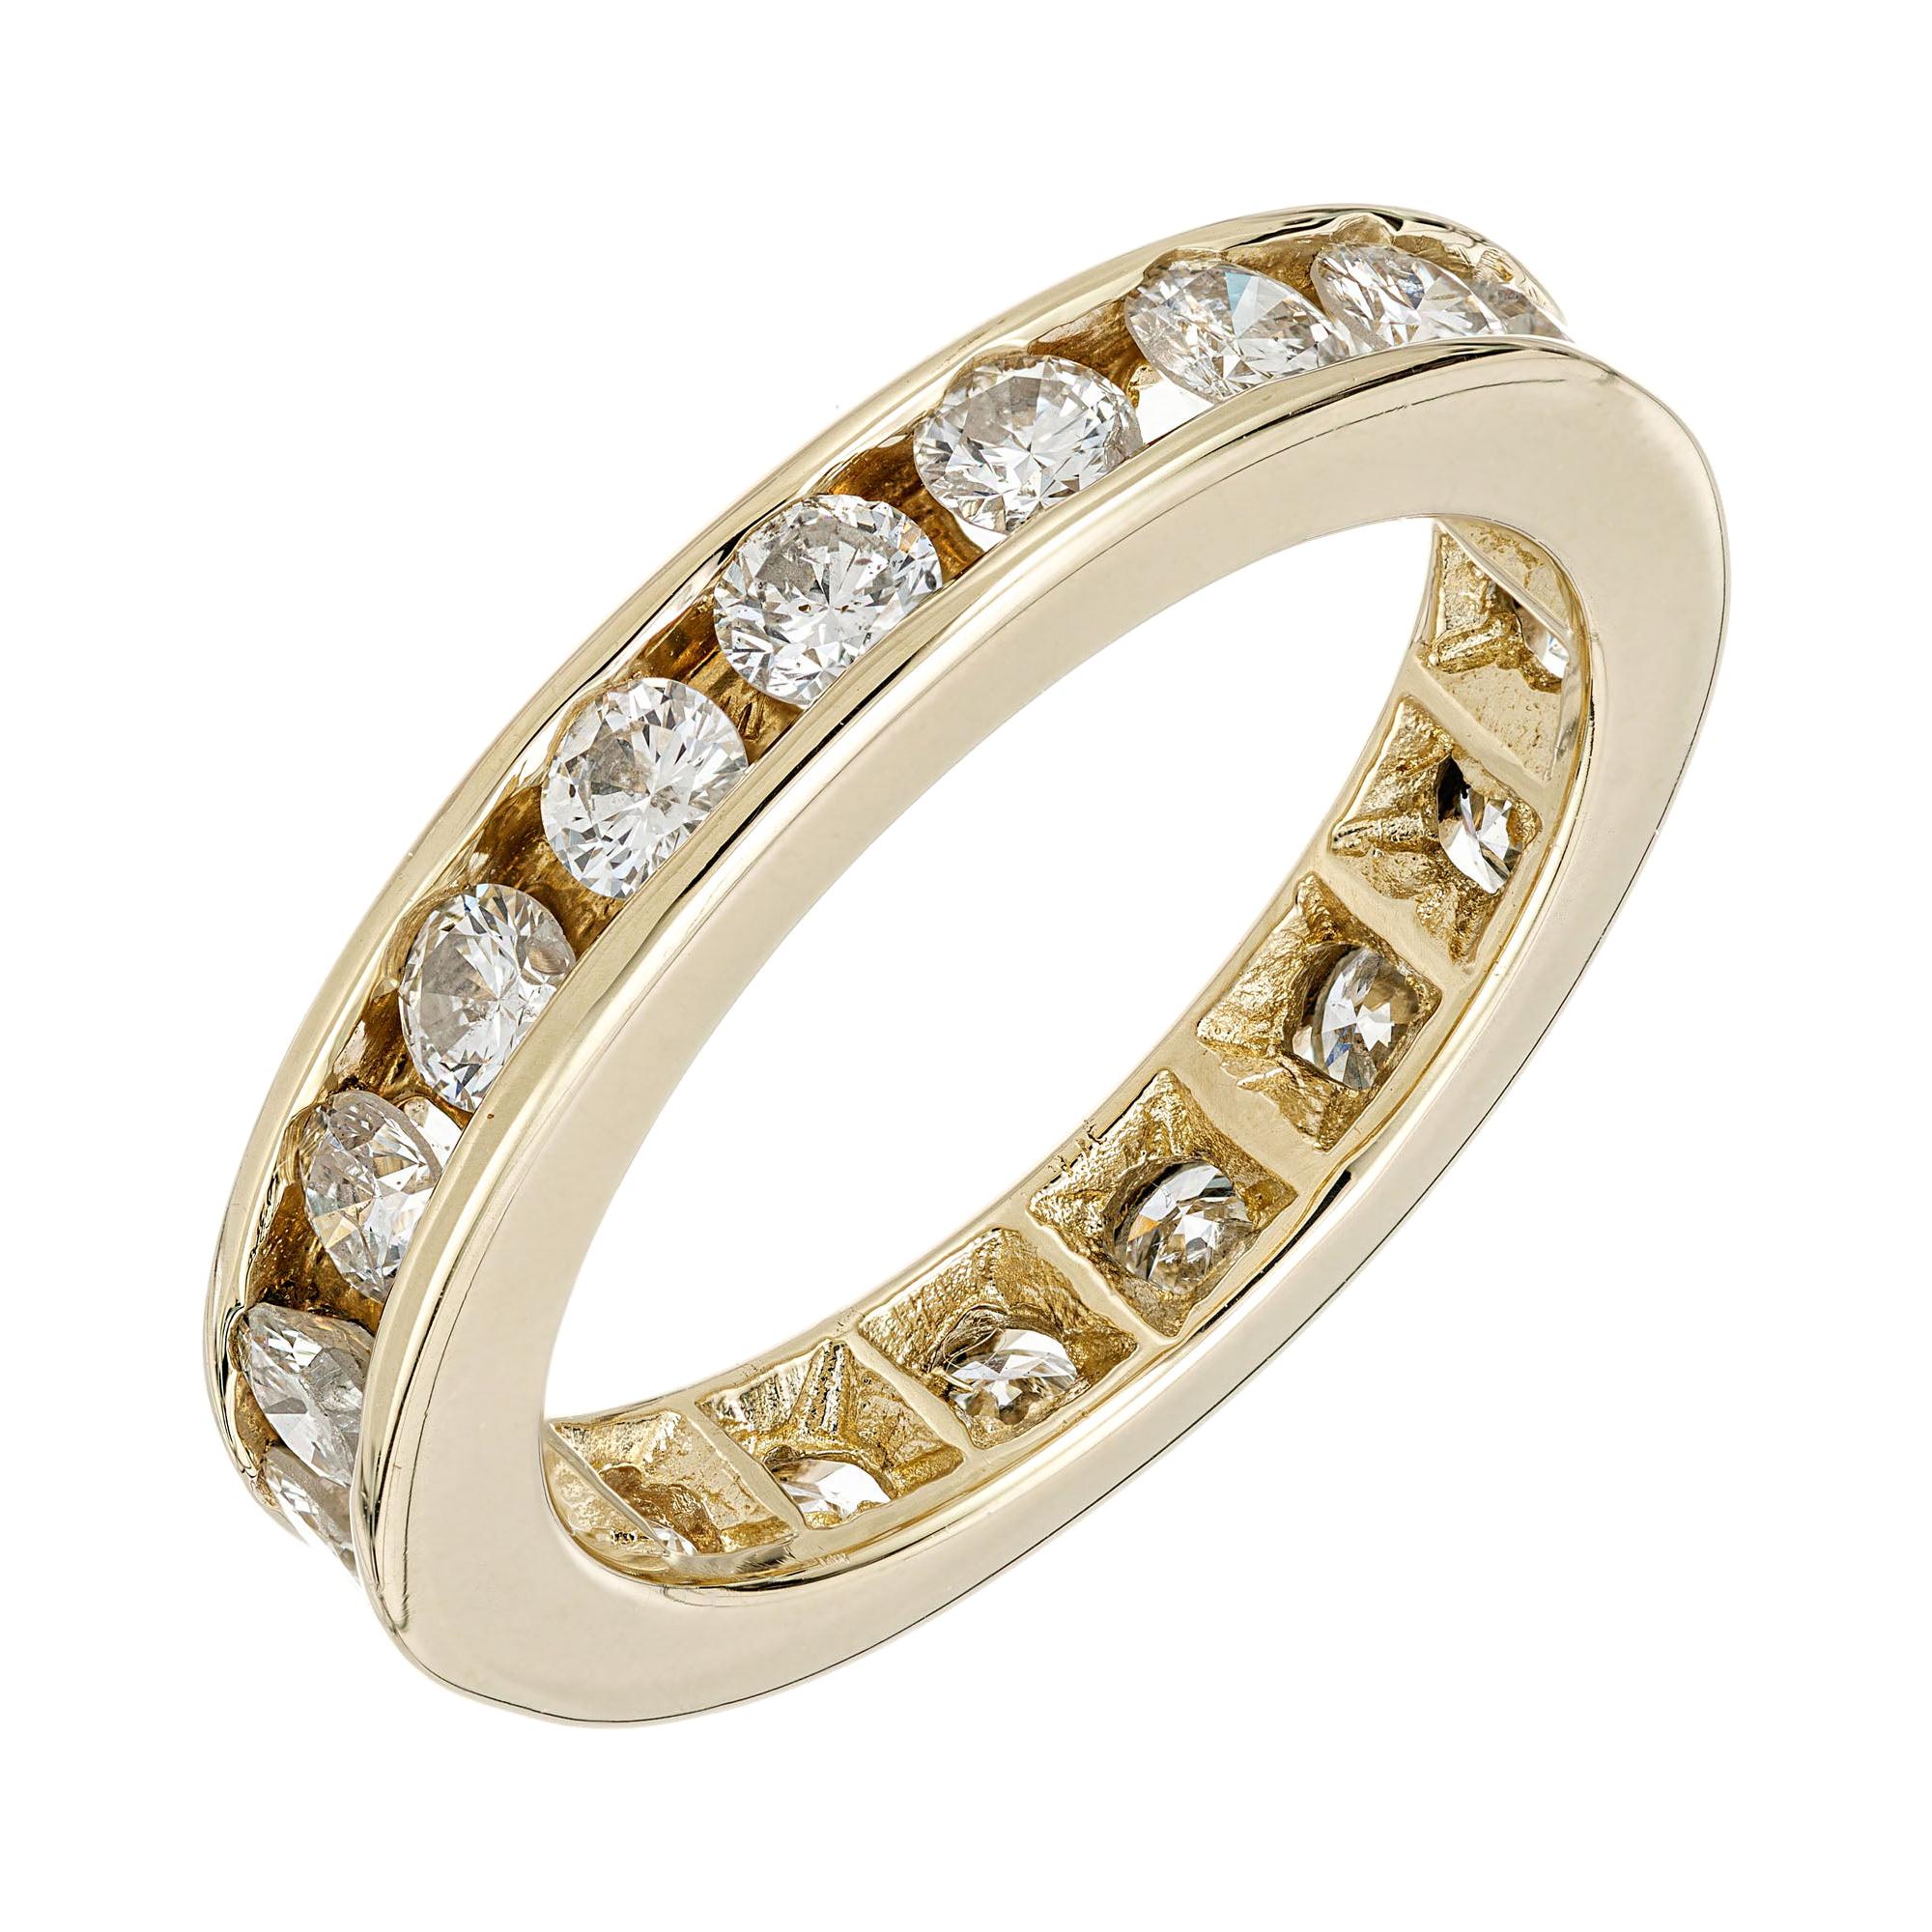 1.15 Carat Diamond Yellow Gold Eternity Band Ring